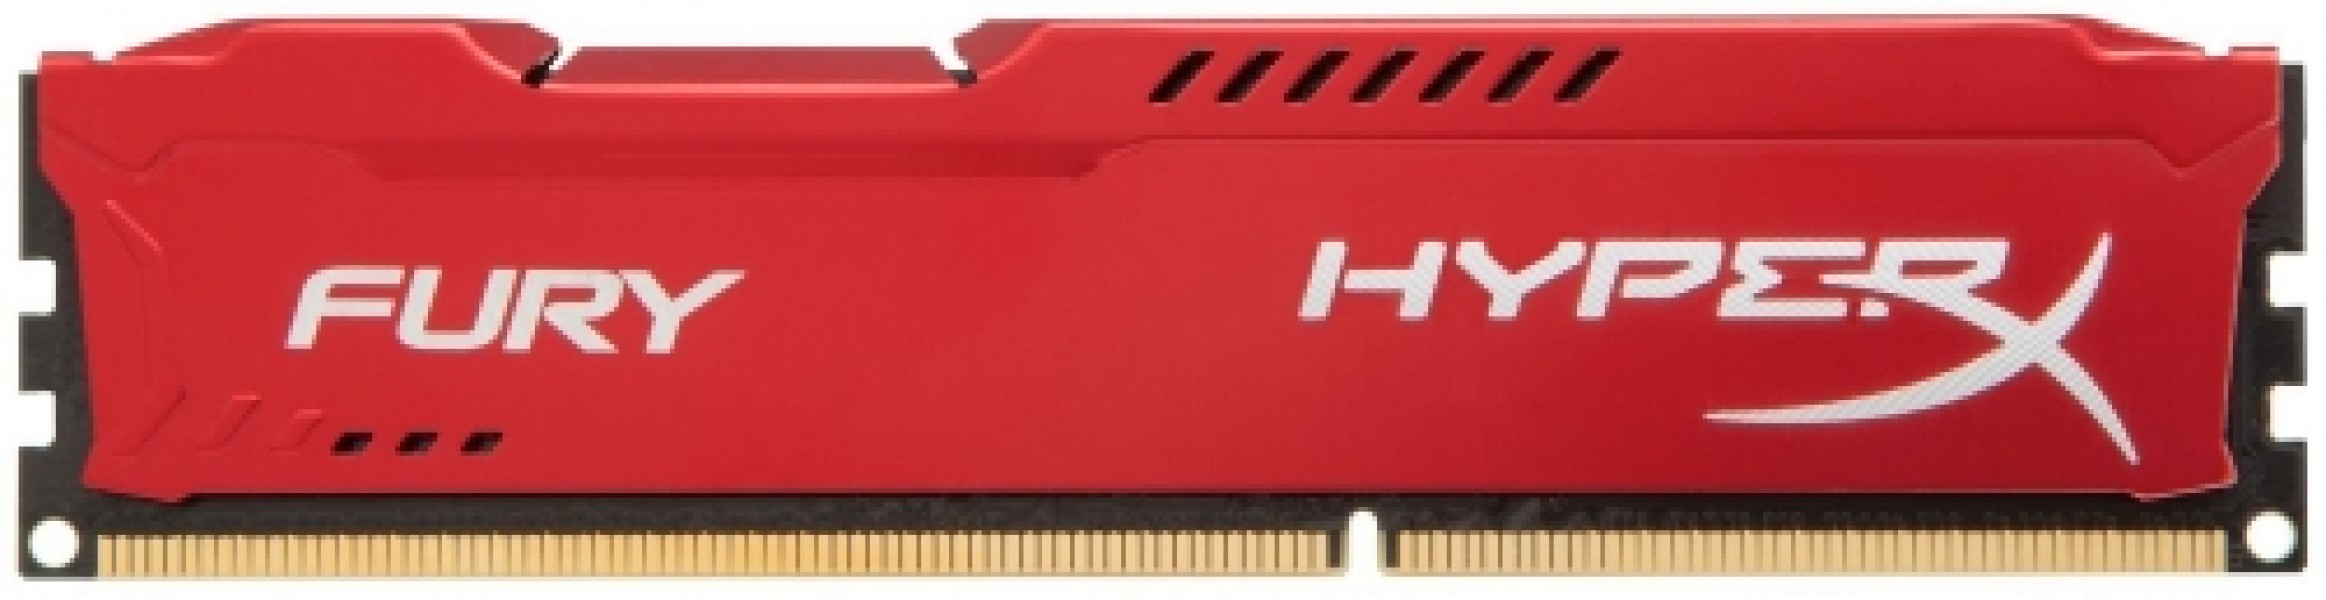 Kingston 4GB DDR3 PC12800 CL10 DIMM HyperX Fury Red HX316C10FR/4